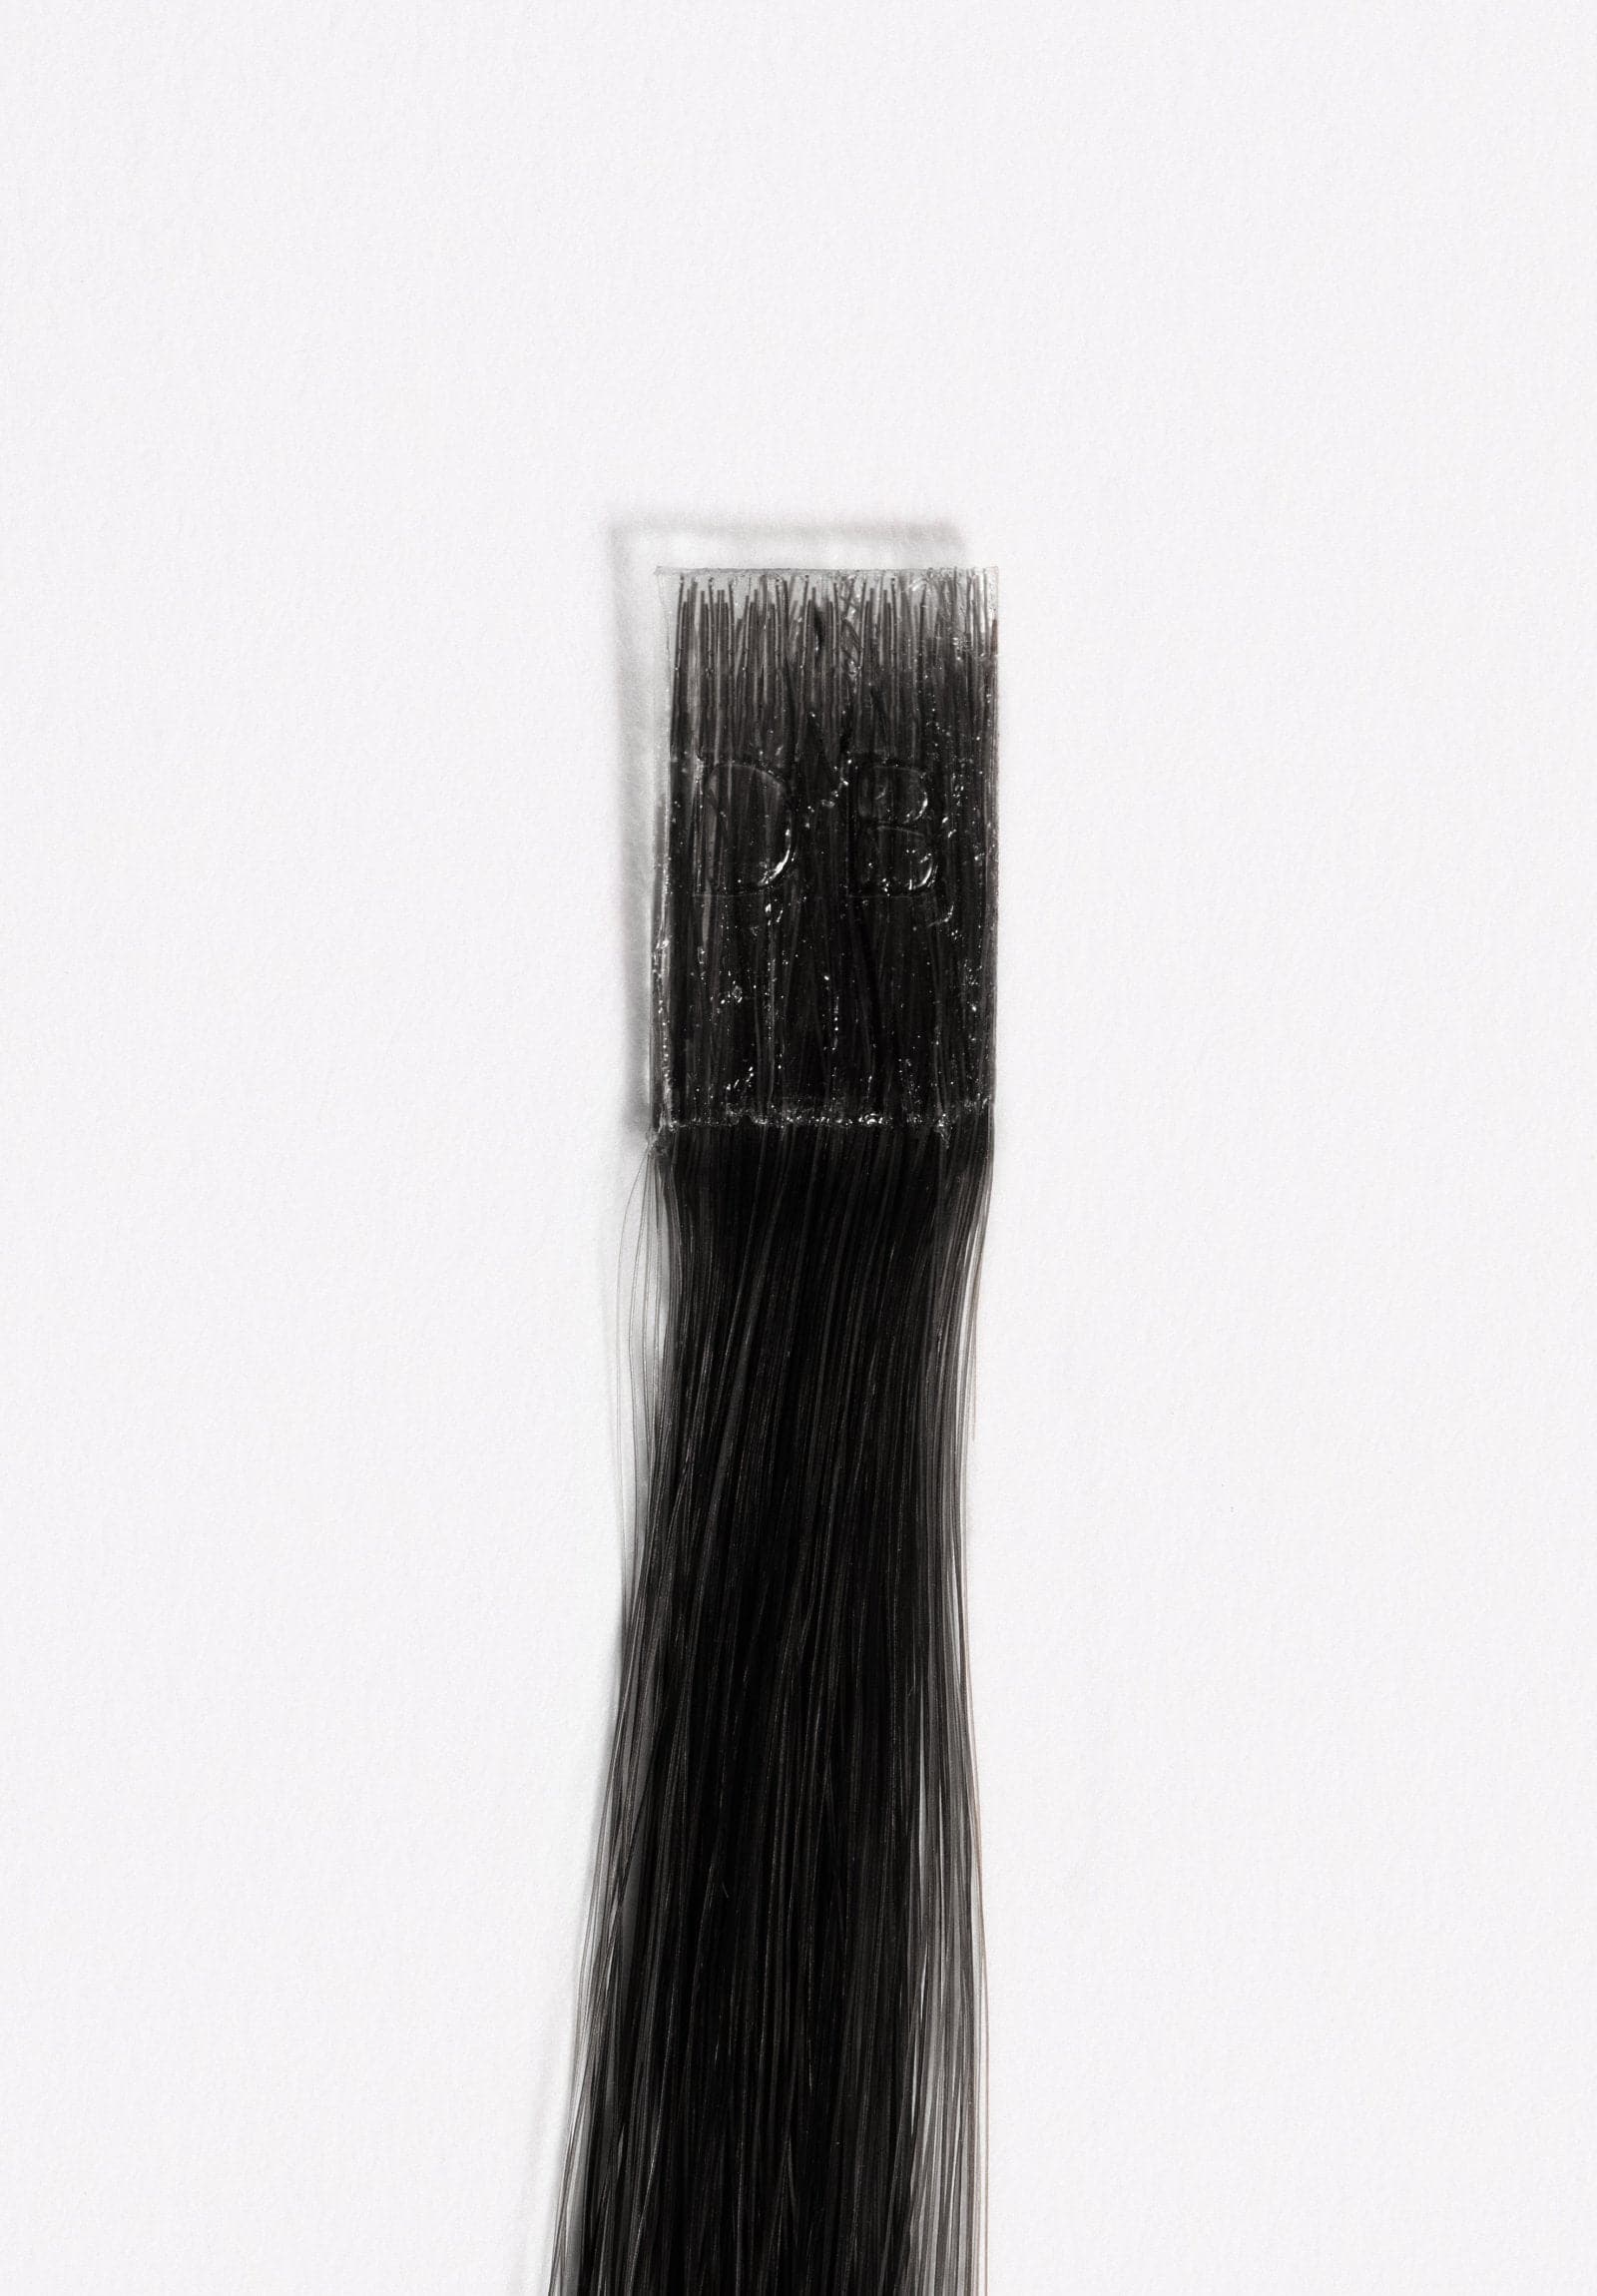 Donna Bella Kera-Link (Fusion) Hair Extension Starter Kit